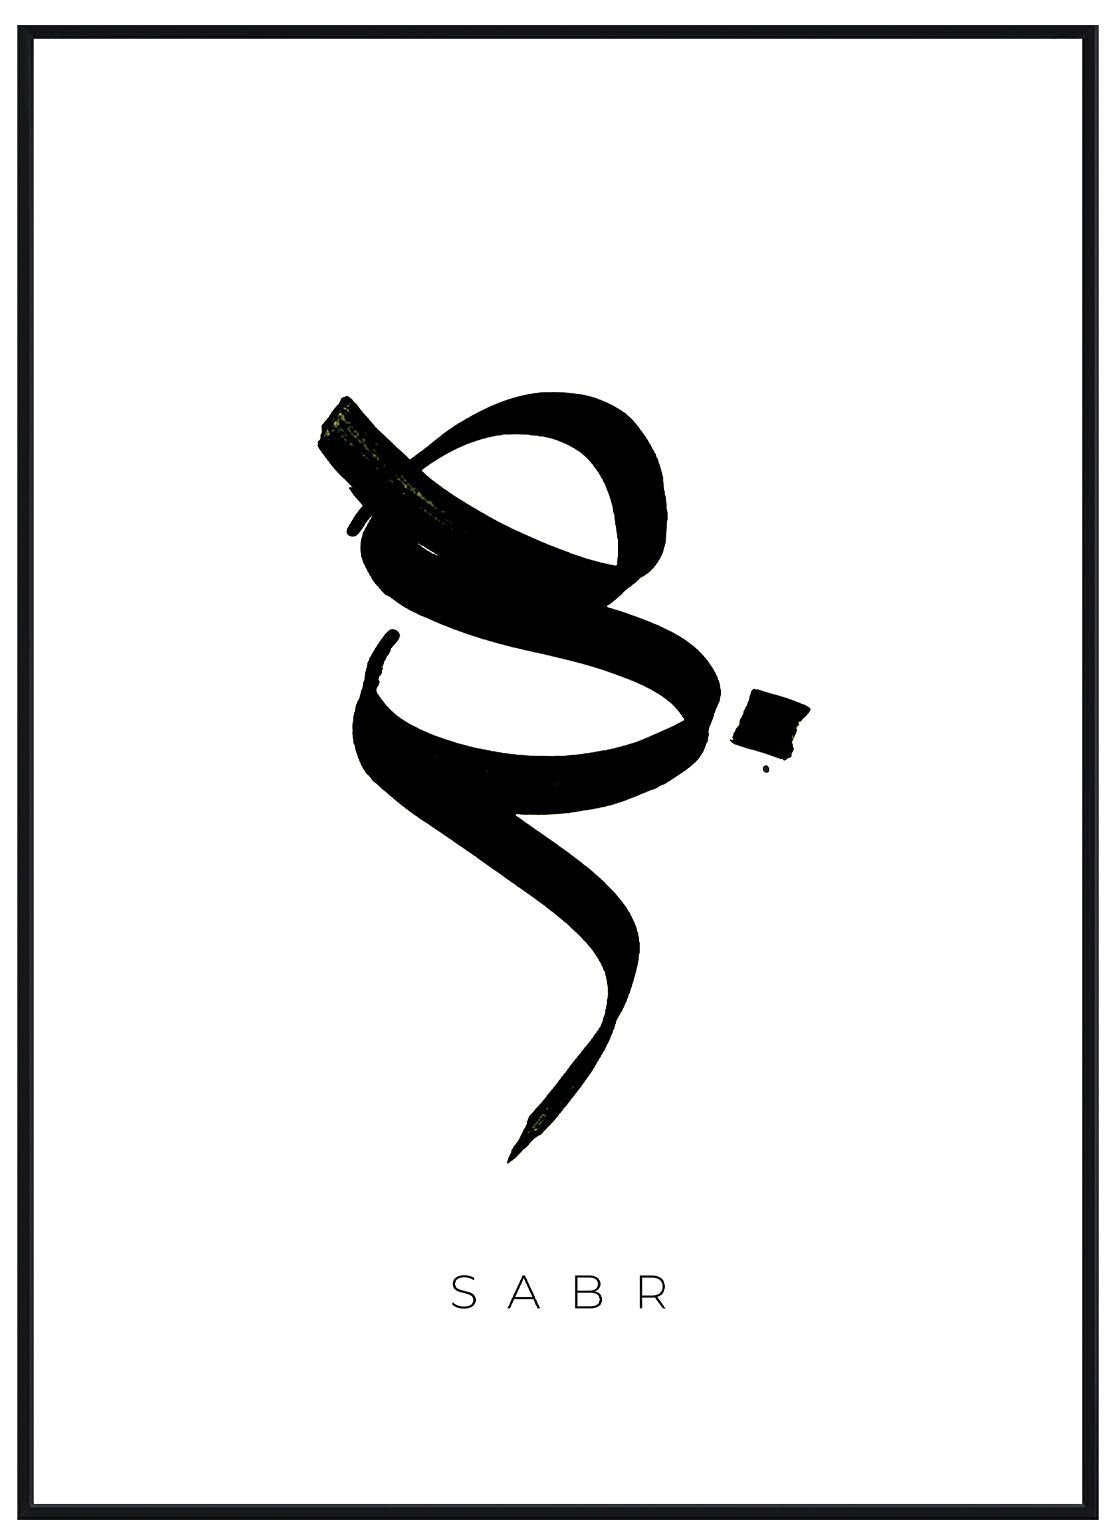 Sabr - Avemfactory